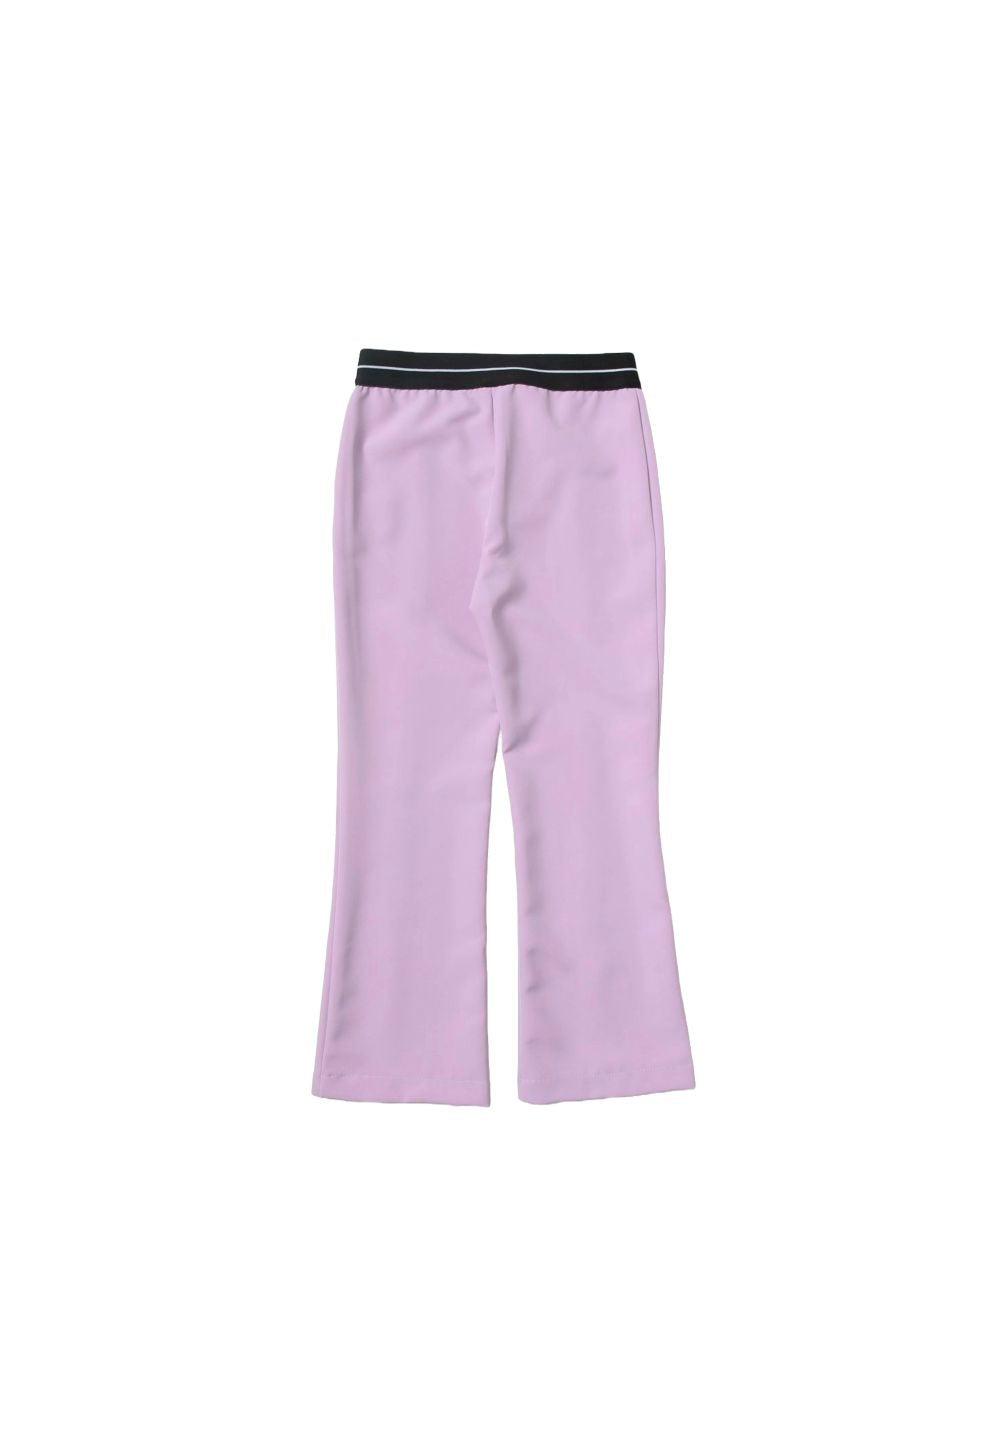 Pantalone lilla per bambina - Primamoda kids